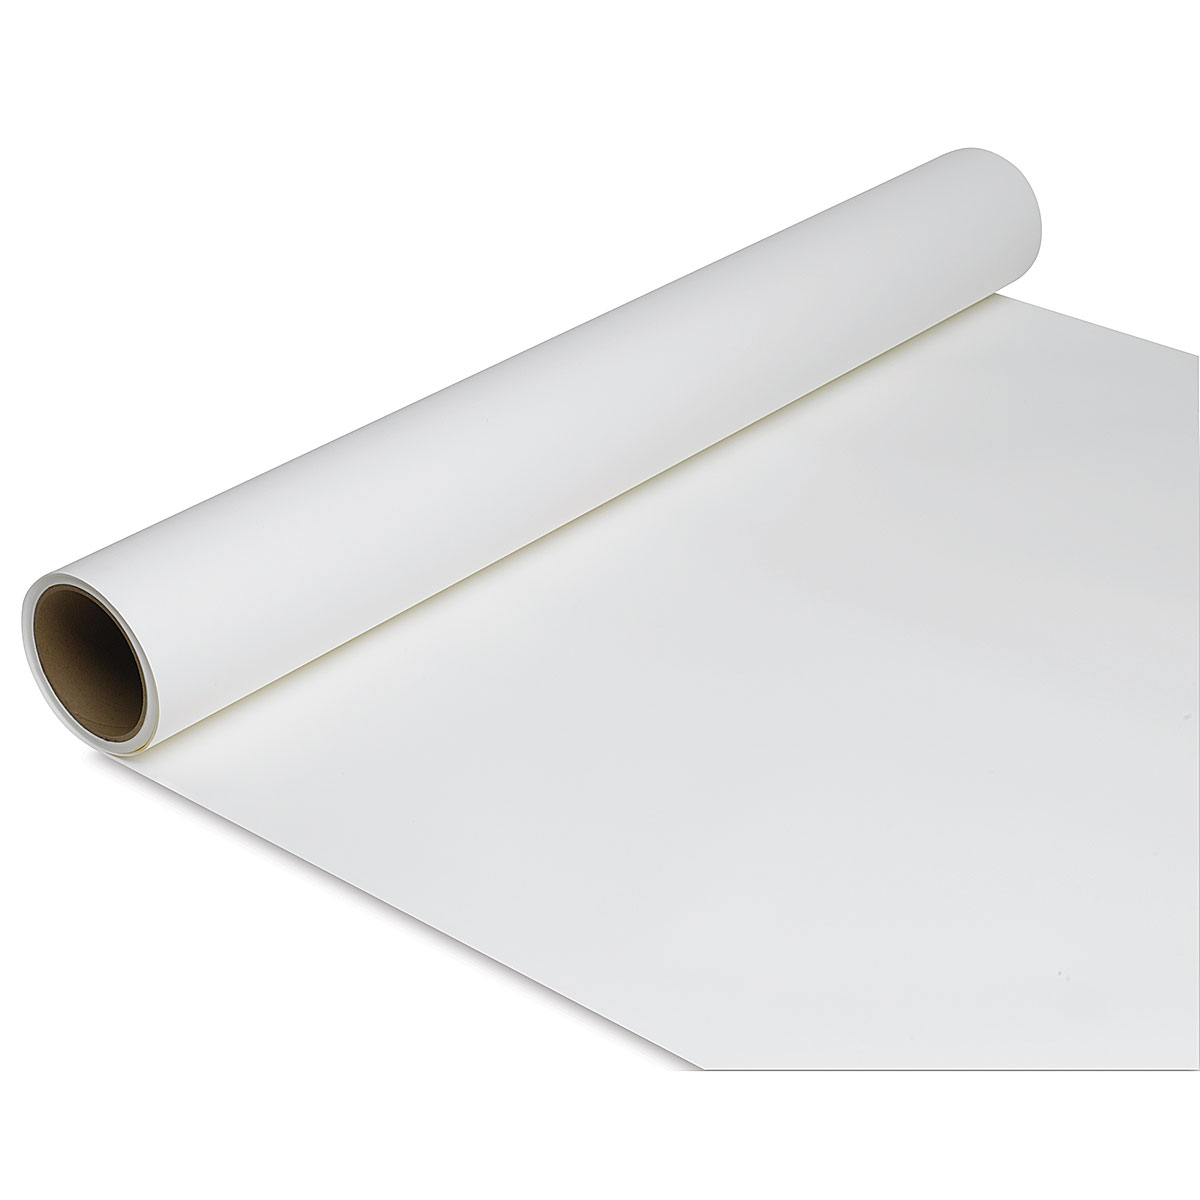 Legion Lenox Cotton Drawing Paper 60" x 20 yds, White, Roll BLICK